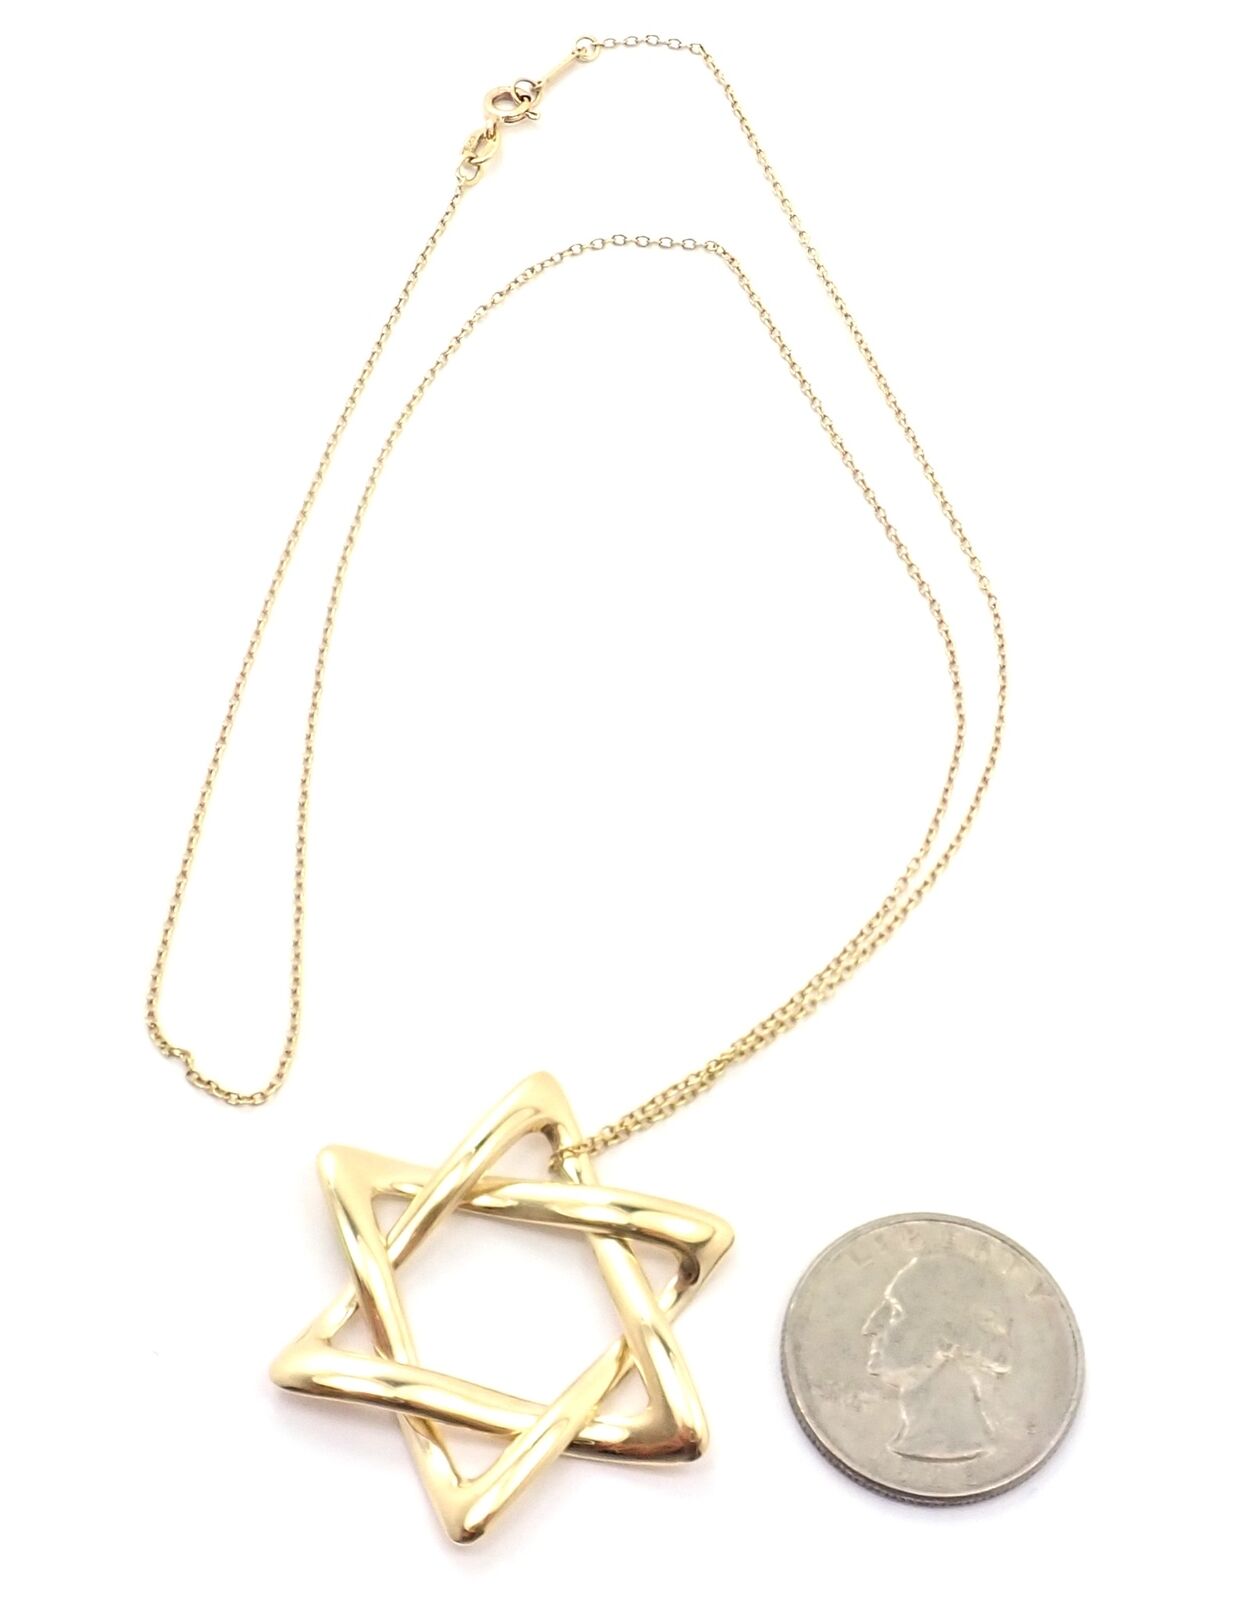 Tiffany & Co. Tiffany Star necklace 925 silver / 00096 | eBay